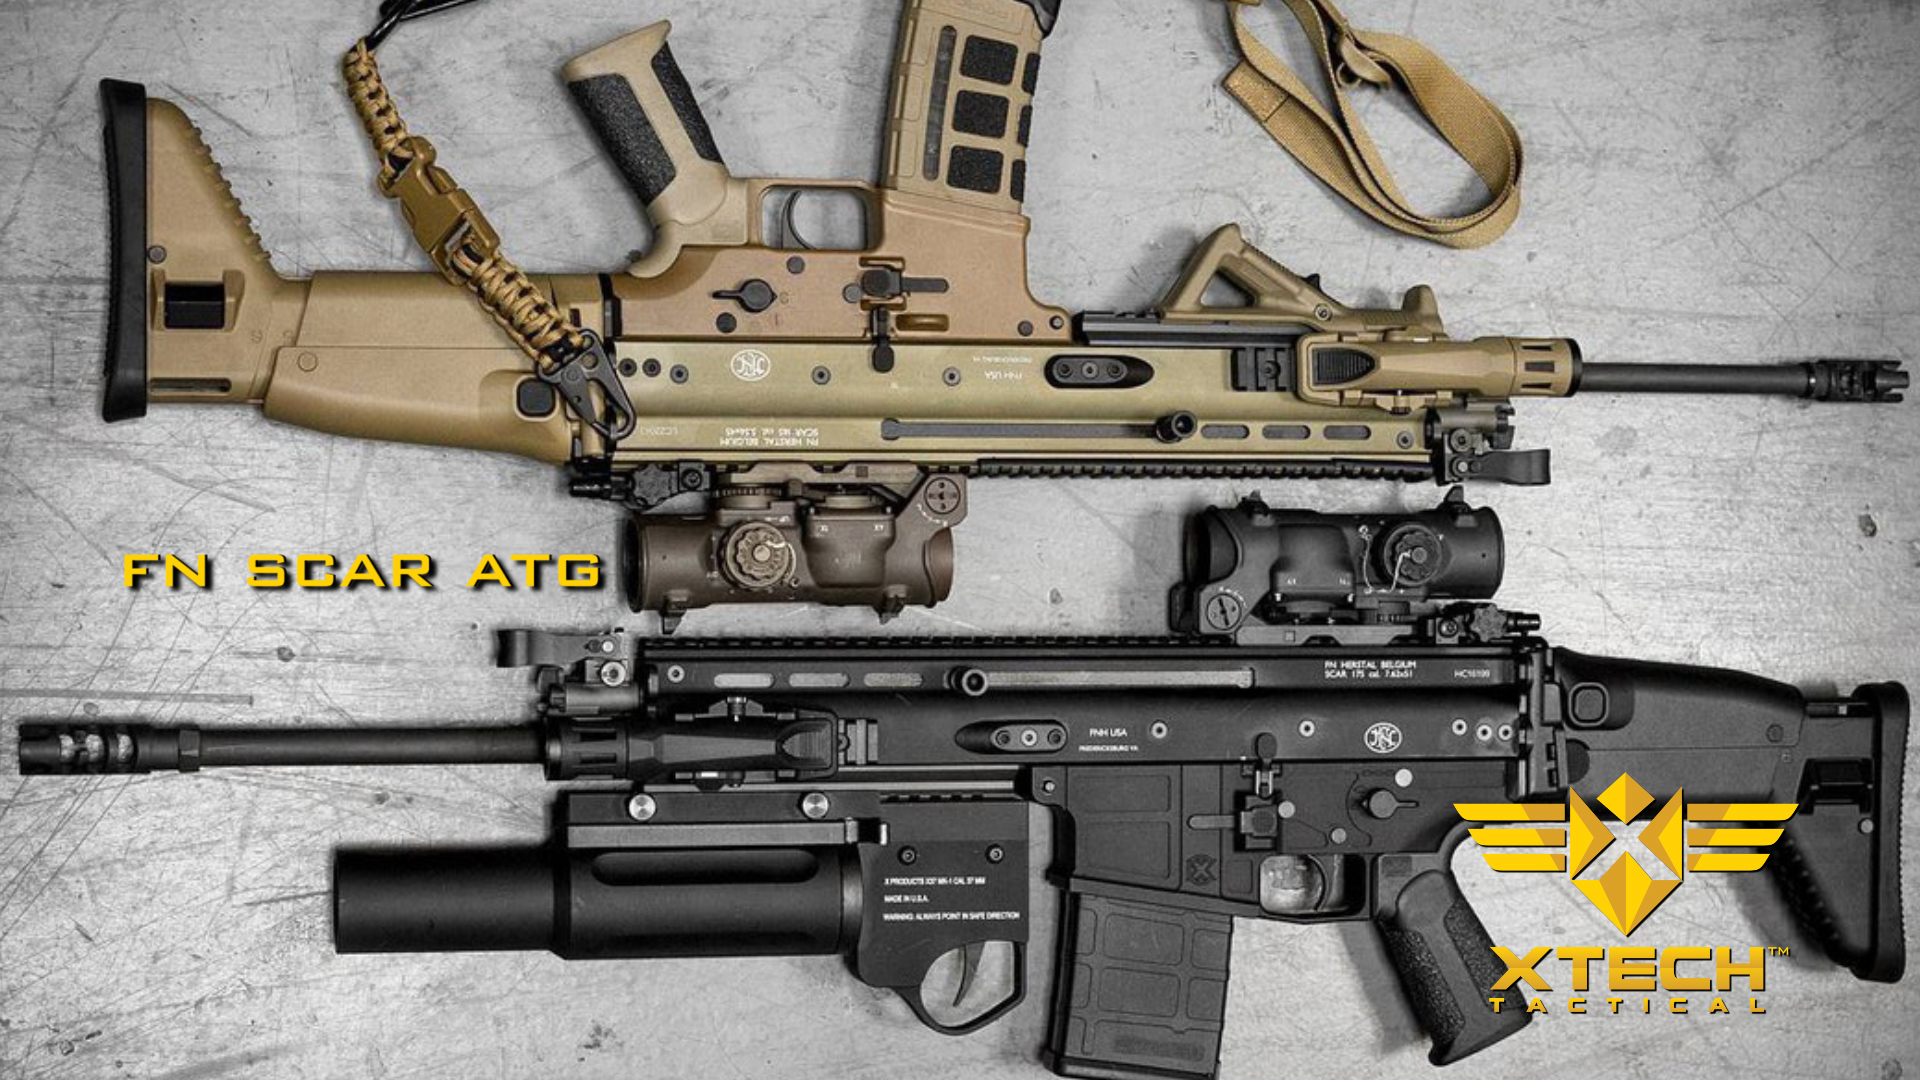 ATG on FN SCAR 